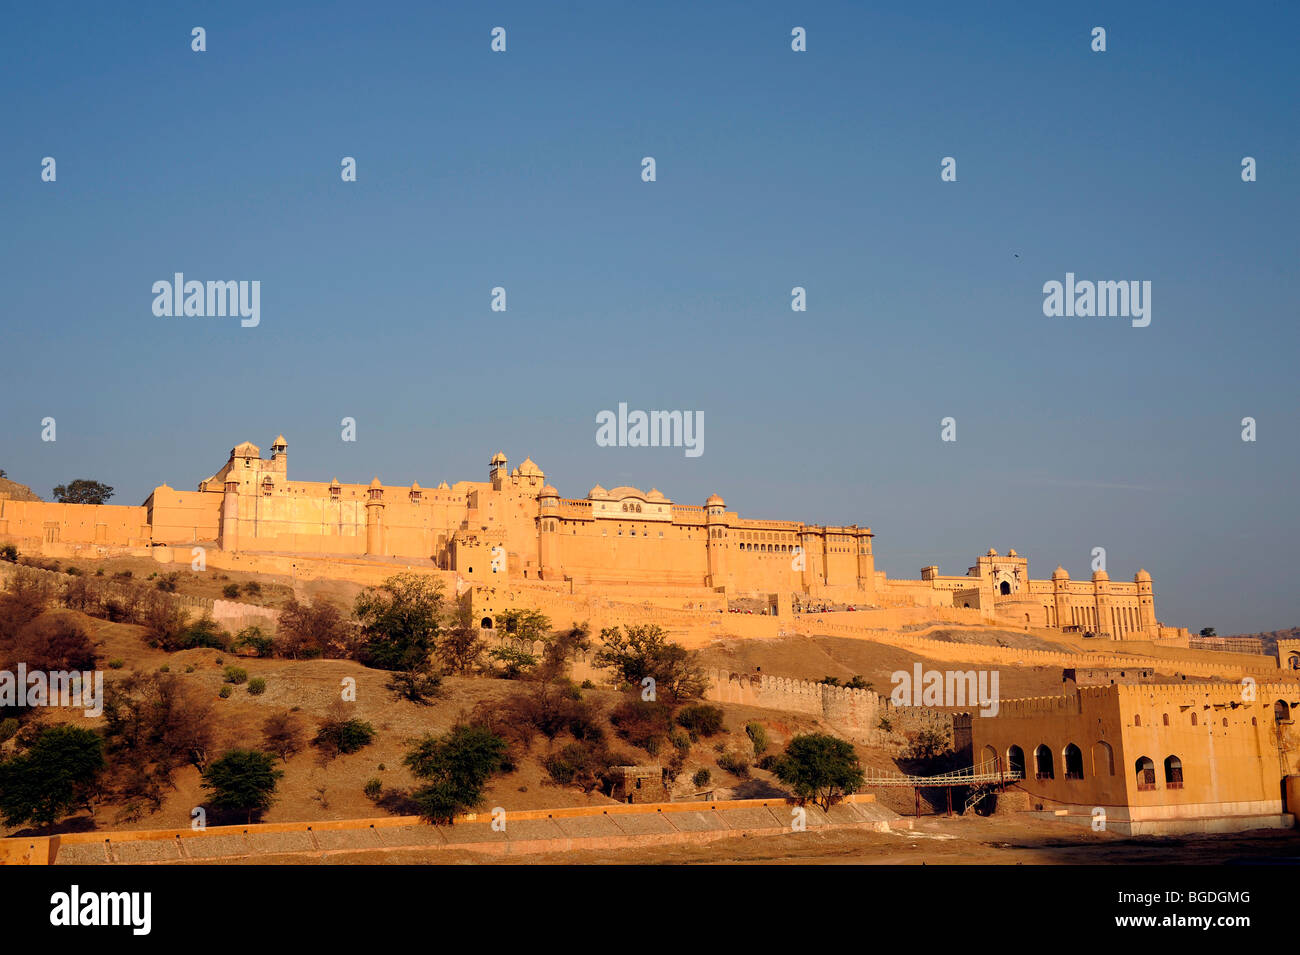 Palace of Amber, Amber, near Jaipur, Rajasthan, North India, India, South Asia, Asia Stock Photo